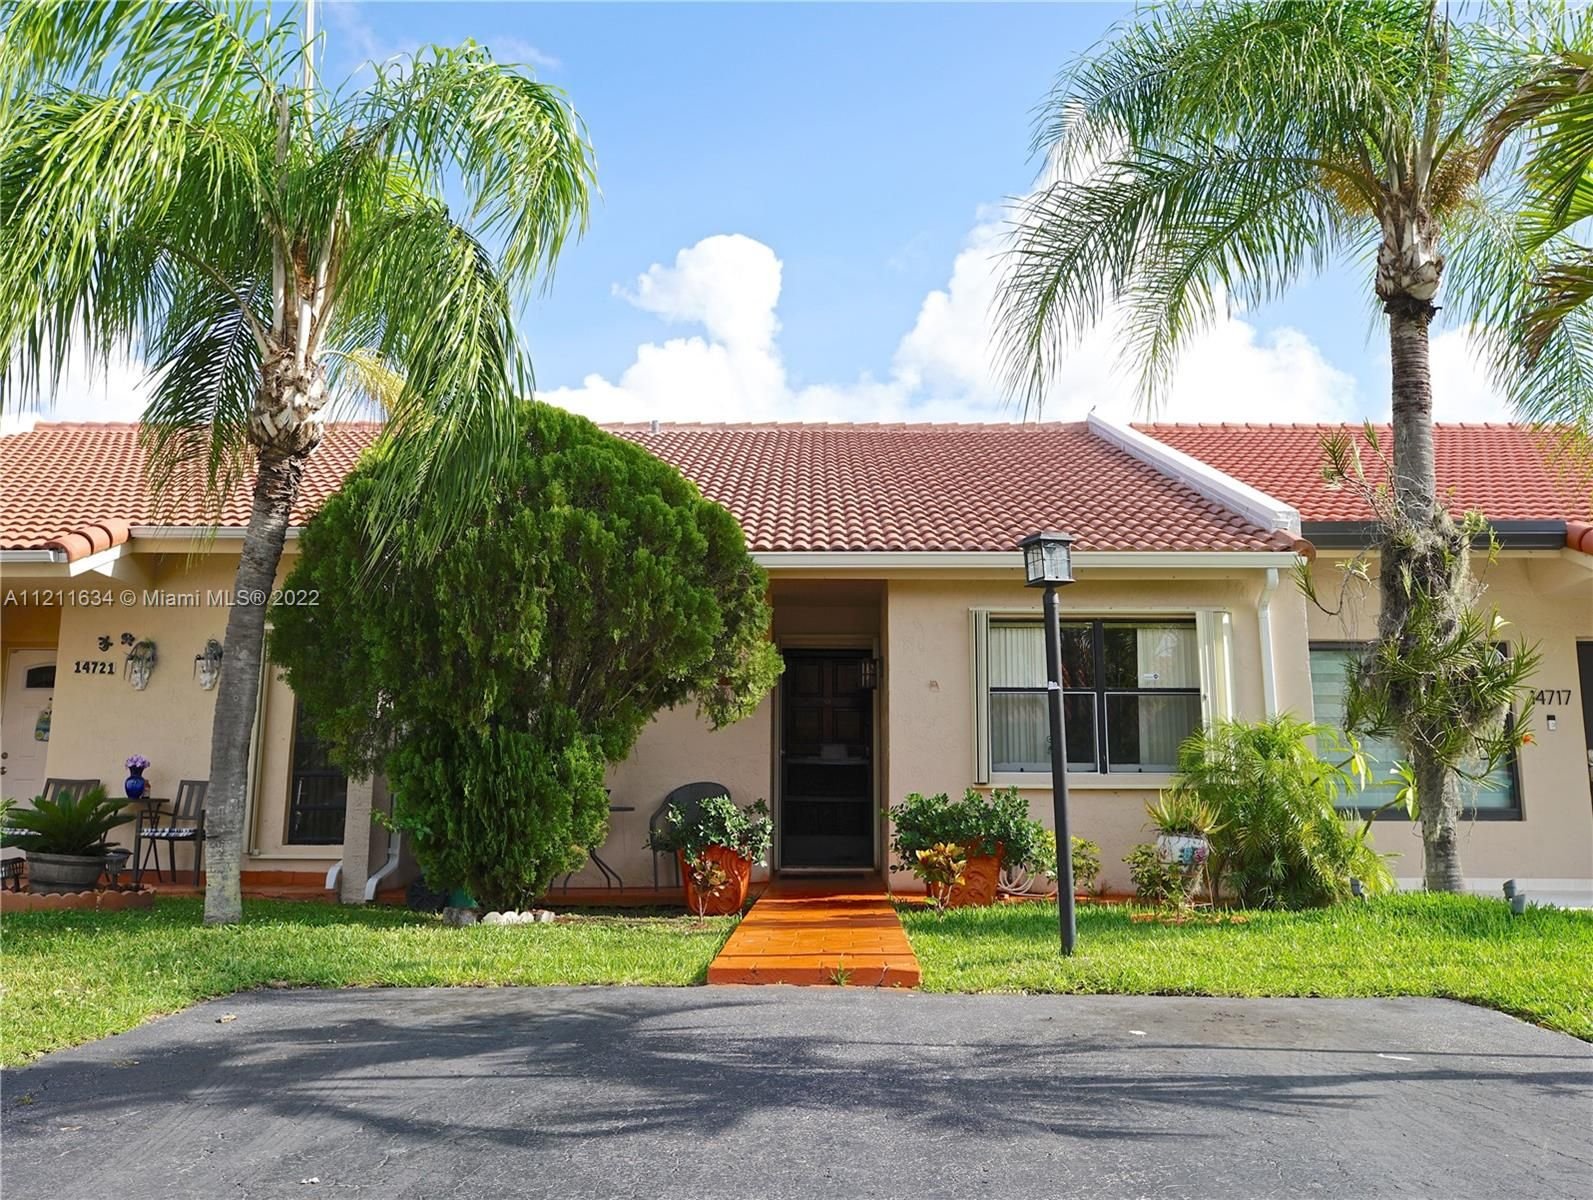 Real estate property located at 14719 63rd Ln #0, Miami-Dade County, Miami, FL